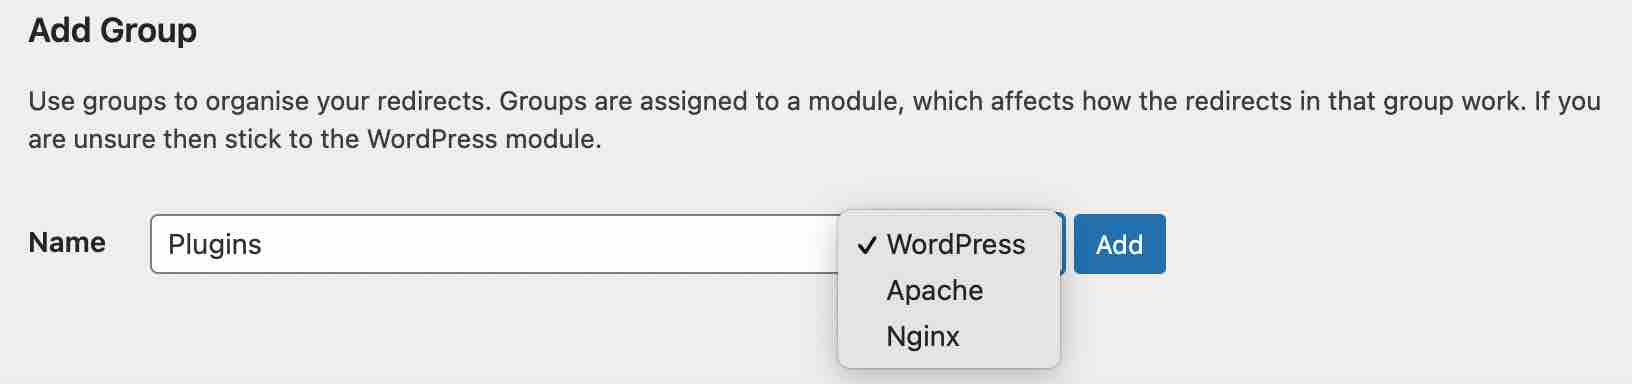 Add Group on WordPress redirection plugin (WordPress, Apache, Nginx).